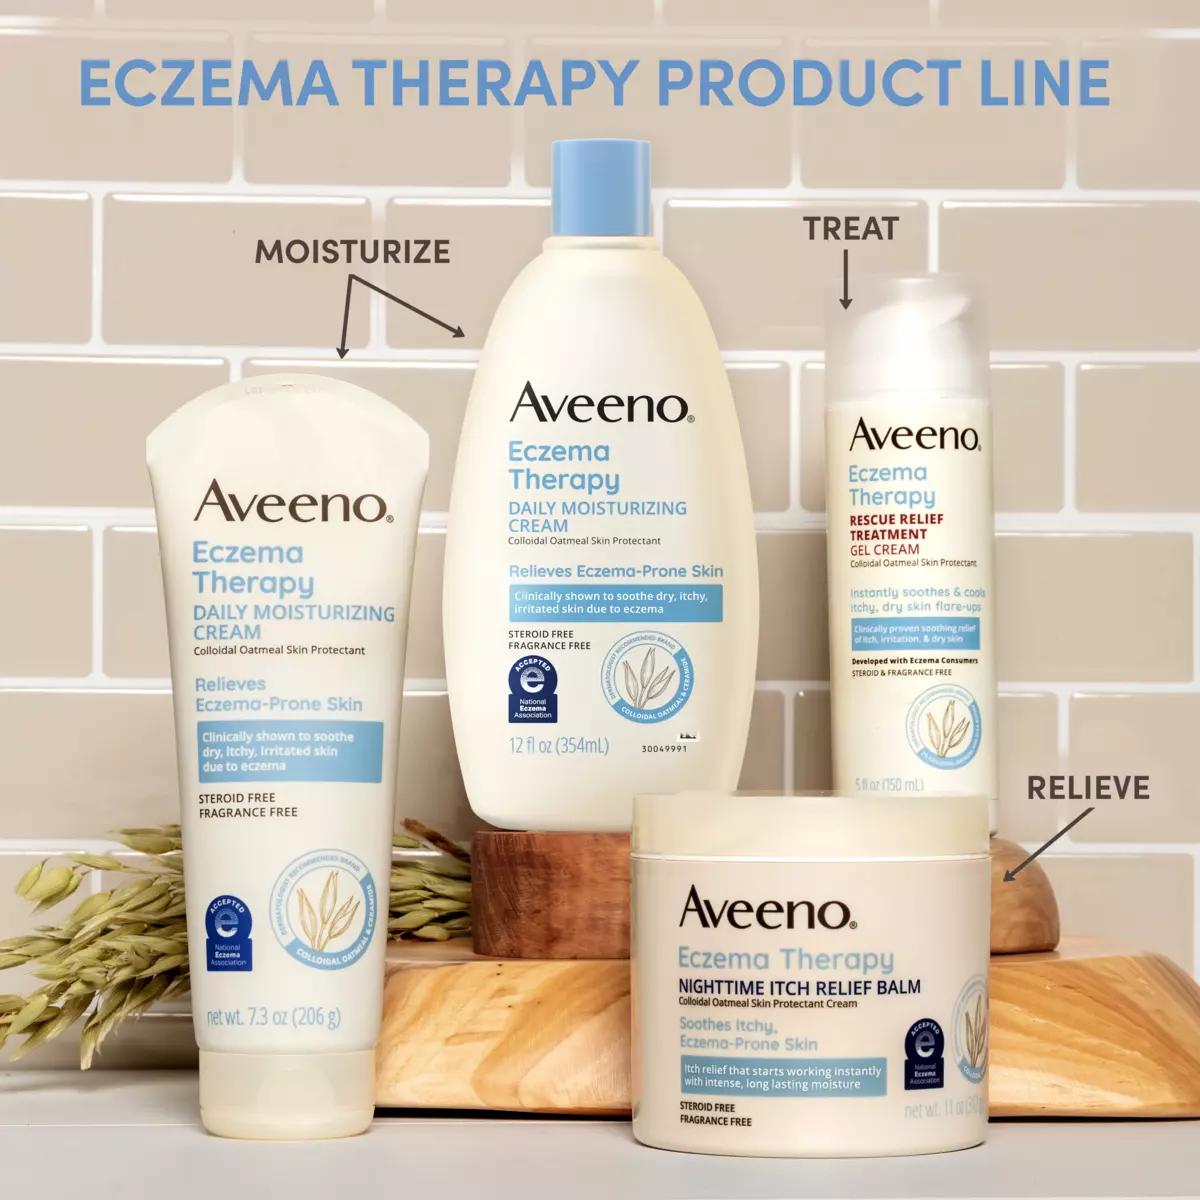 Aveeno Eczema Therapy Full Product Line 